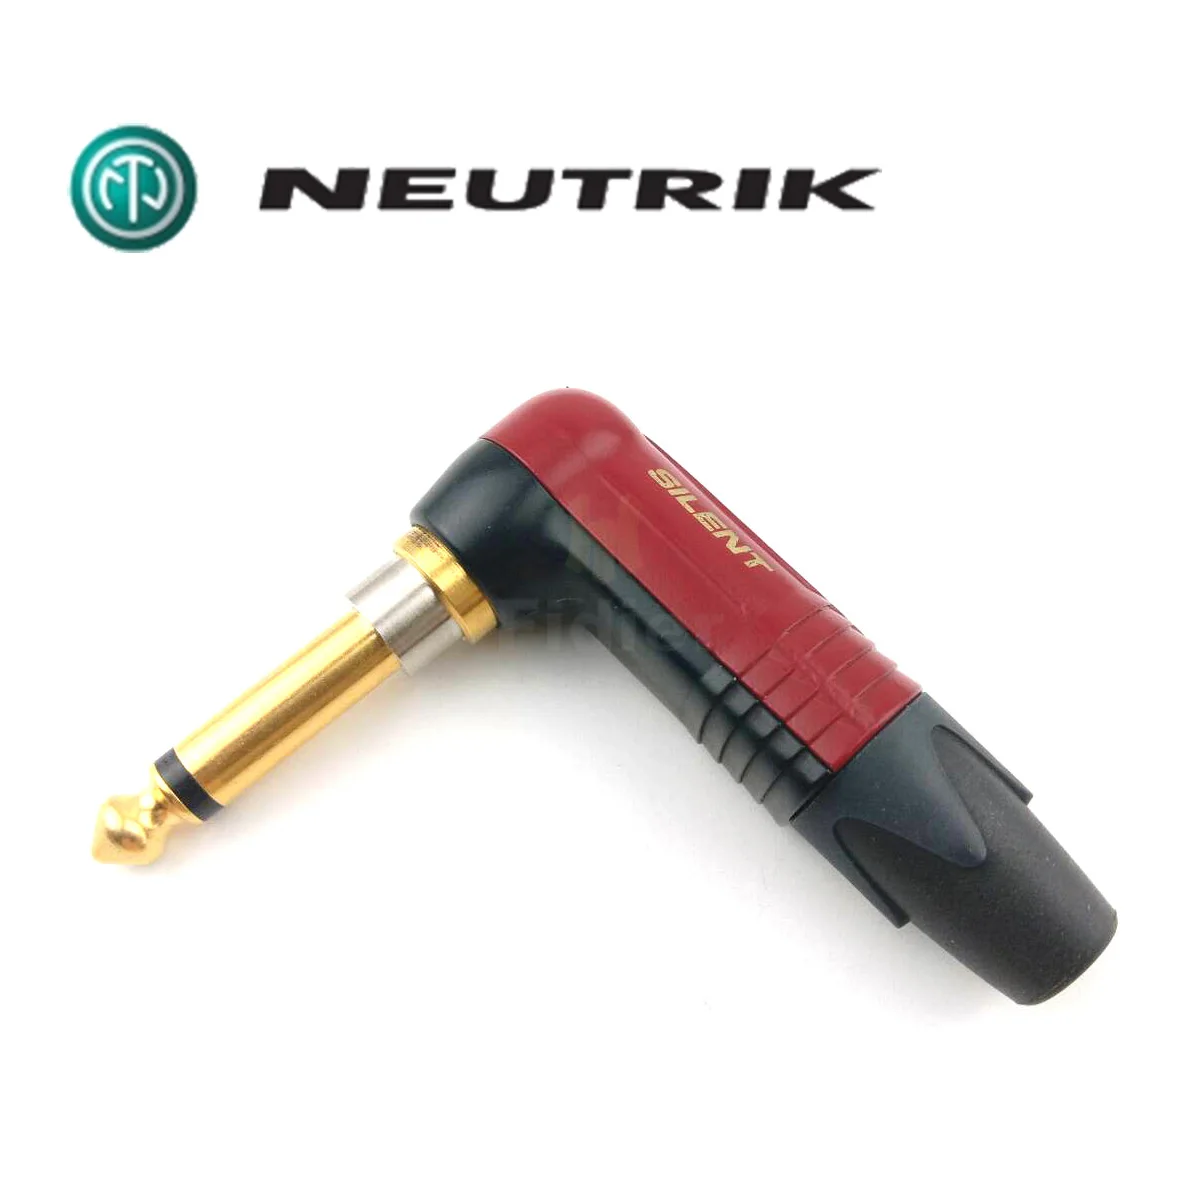 

Switzerland Neutrik NPR2X-AU-SILENT 6.5mm angle 1/4" professional instrument (guitar) plug, gold plated contacts